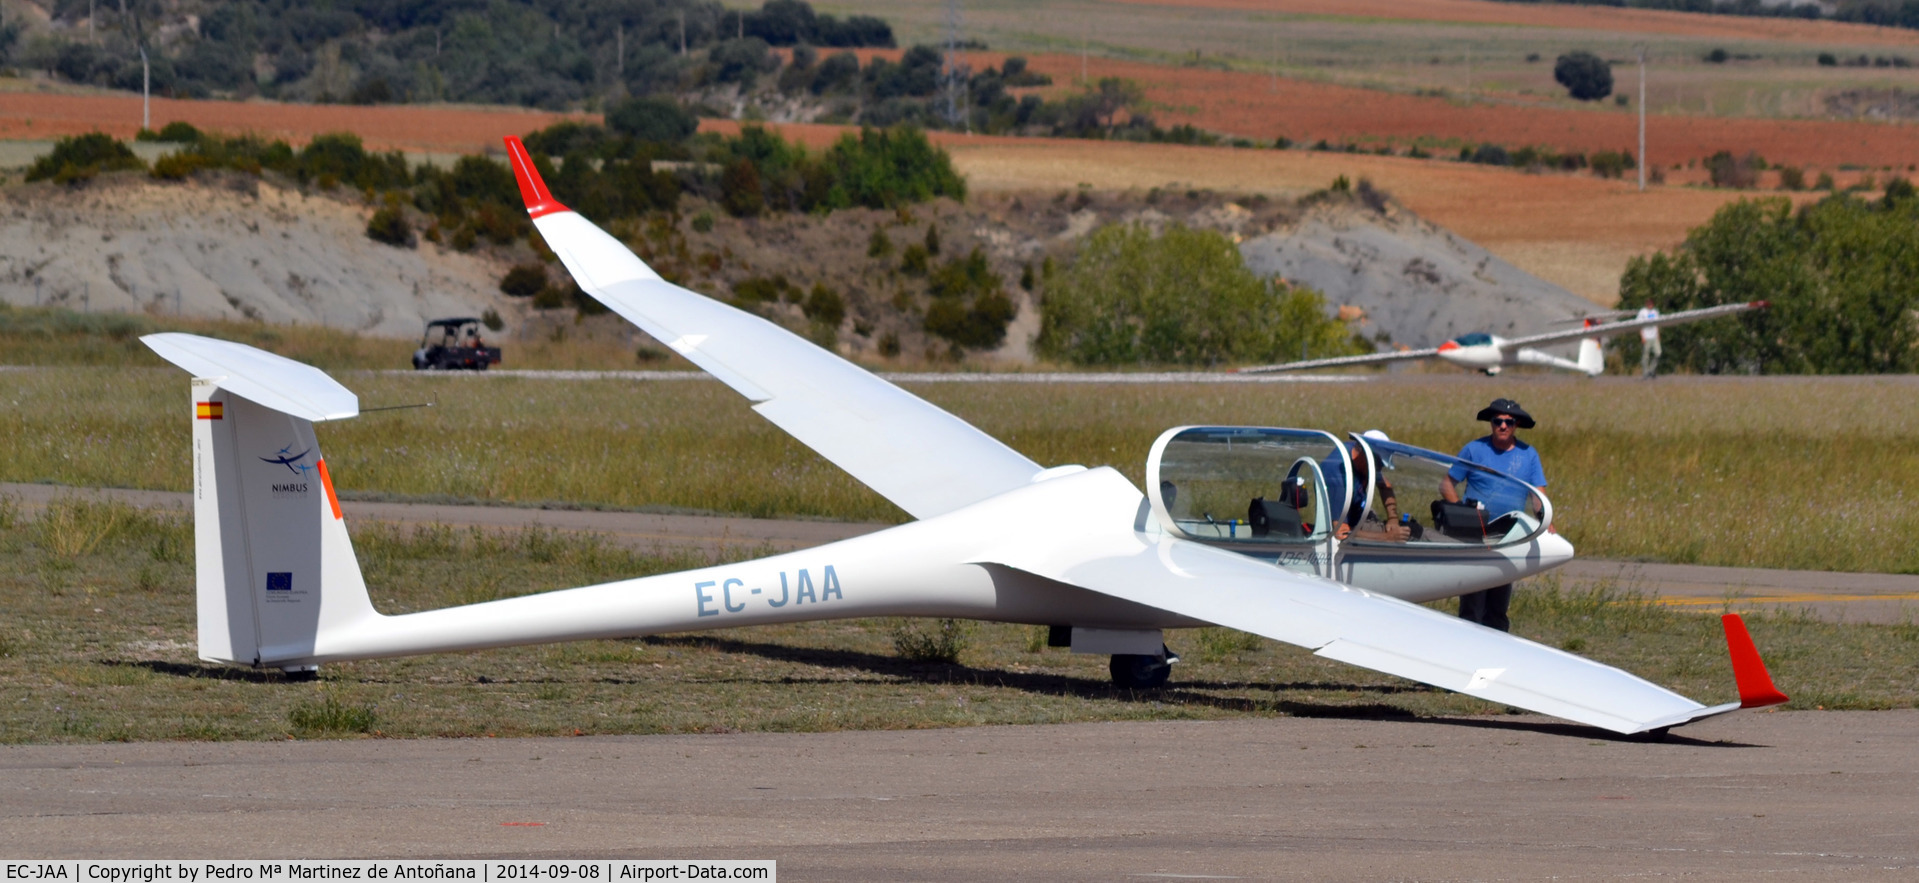 EC-JAA, 2000 DG Flugzeugbau DG1000 S C/N 51S50, Aerodromo Santa Cilia - Huesca - España